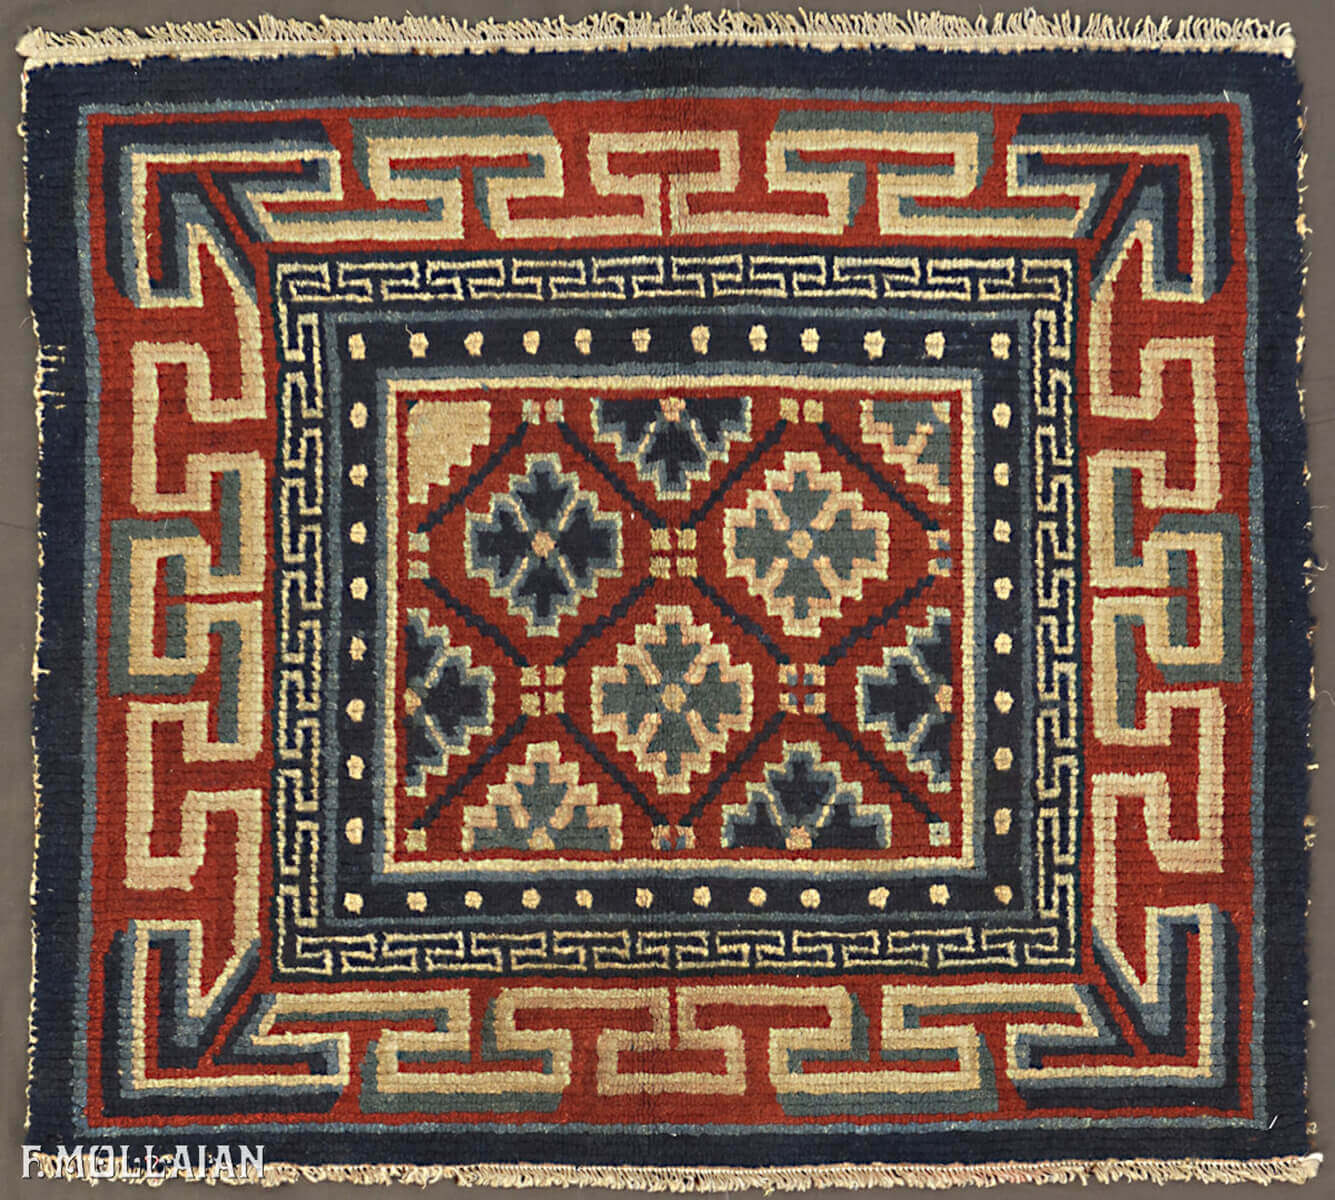 Antique Tibetan Rug n°:45556409